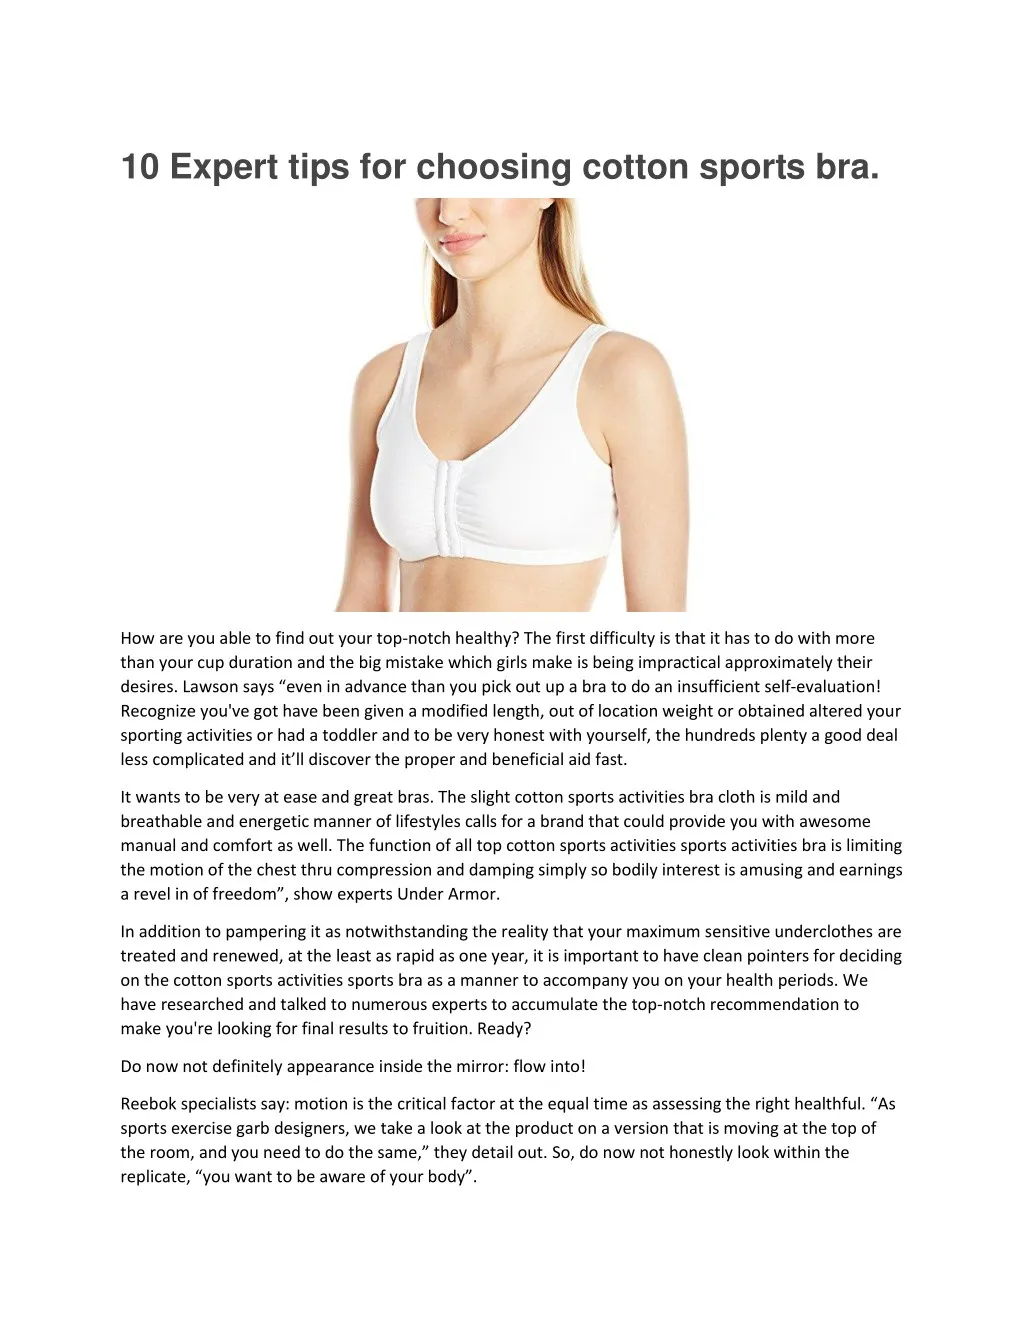 10 expert tips for choosing cotton sports bra